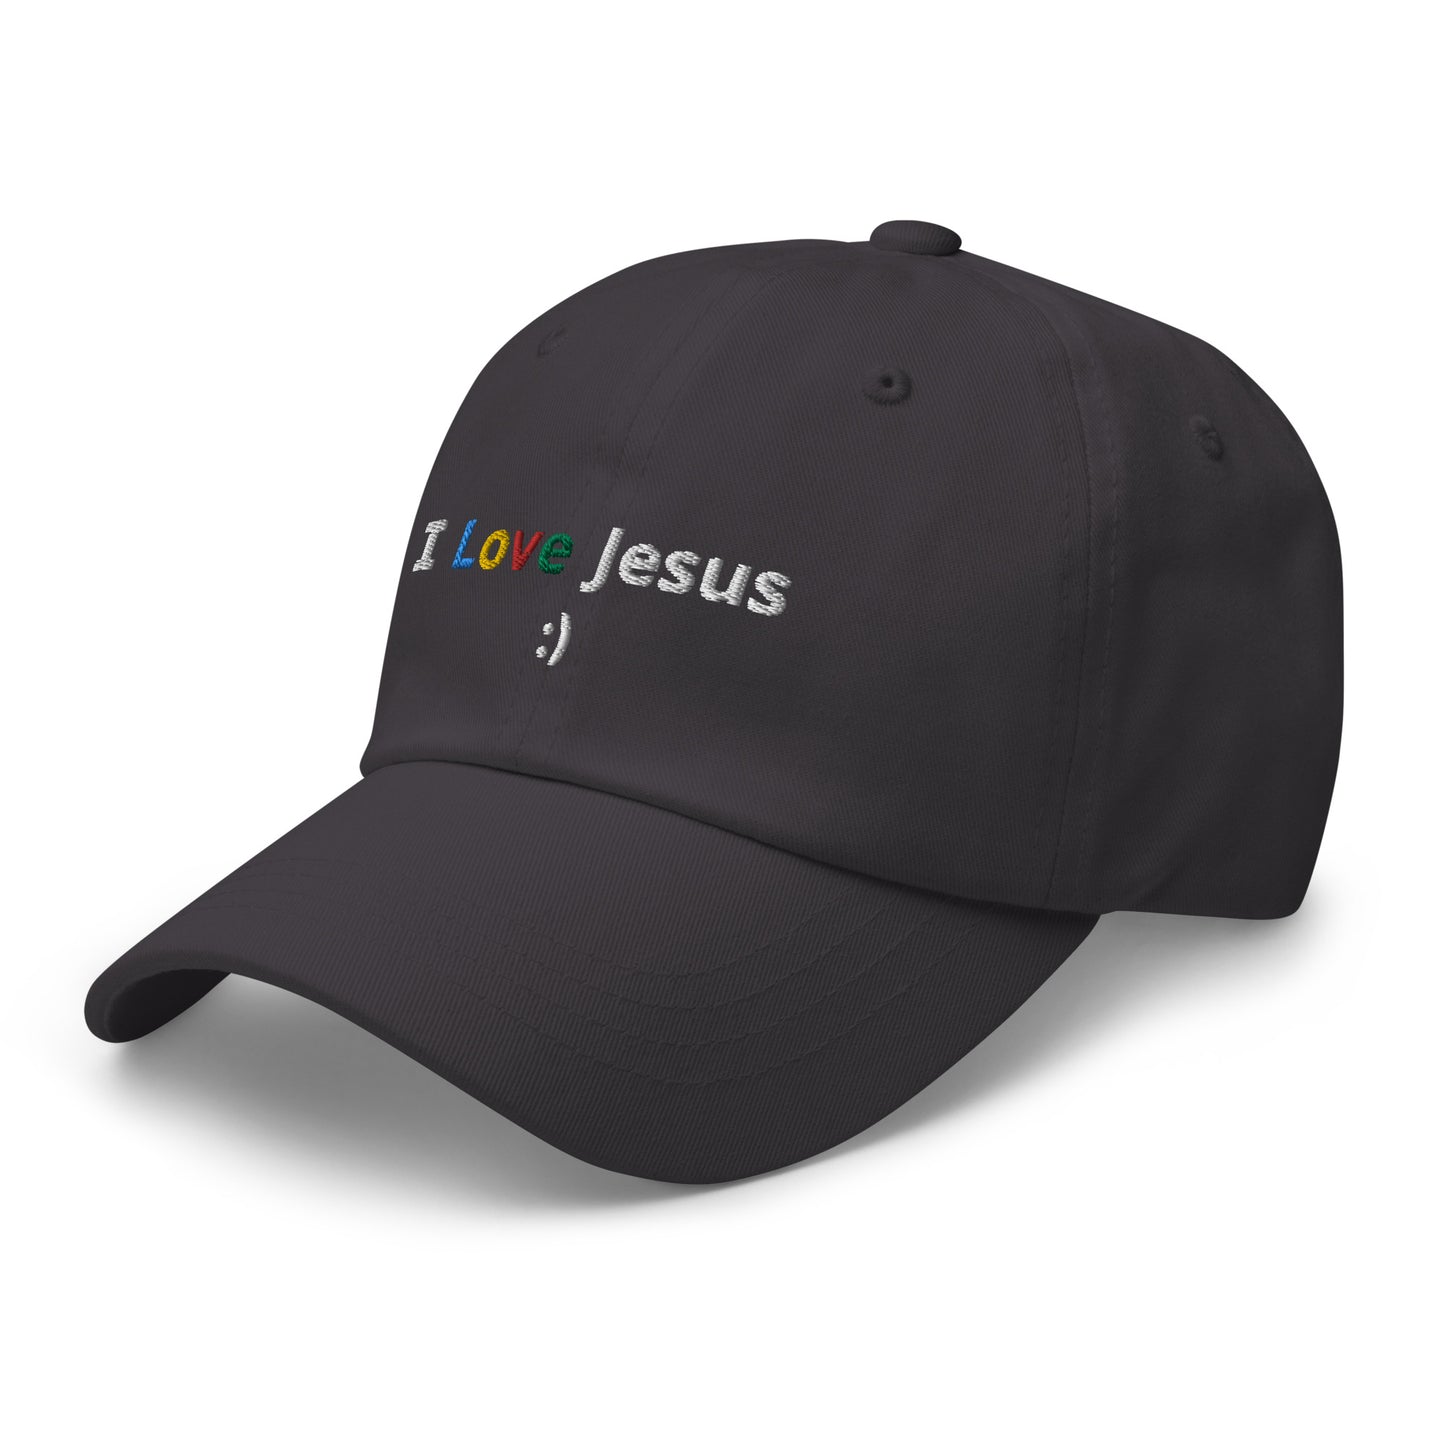 I Love Jesus:) Embroidery Hat